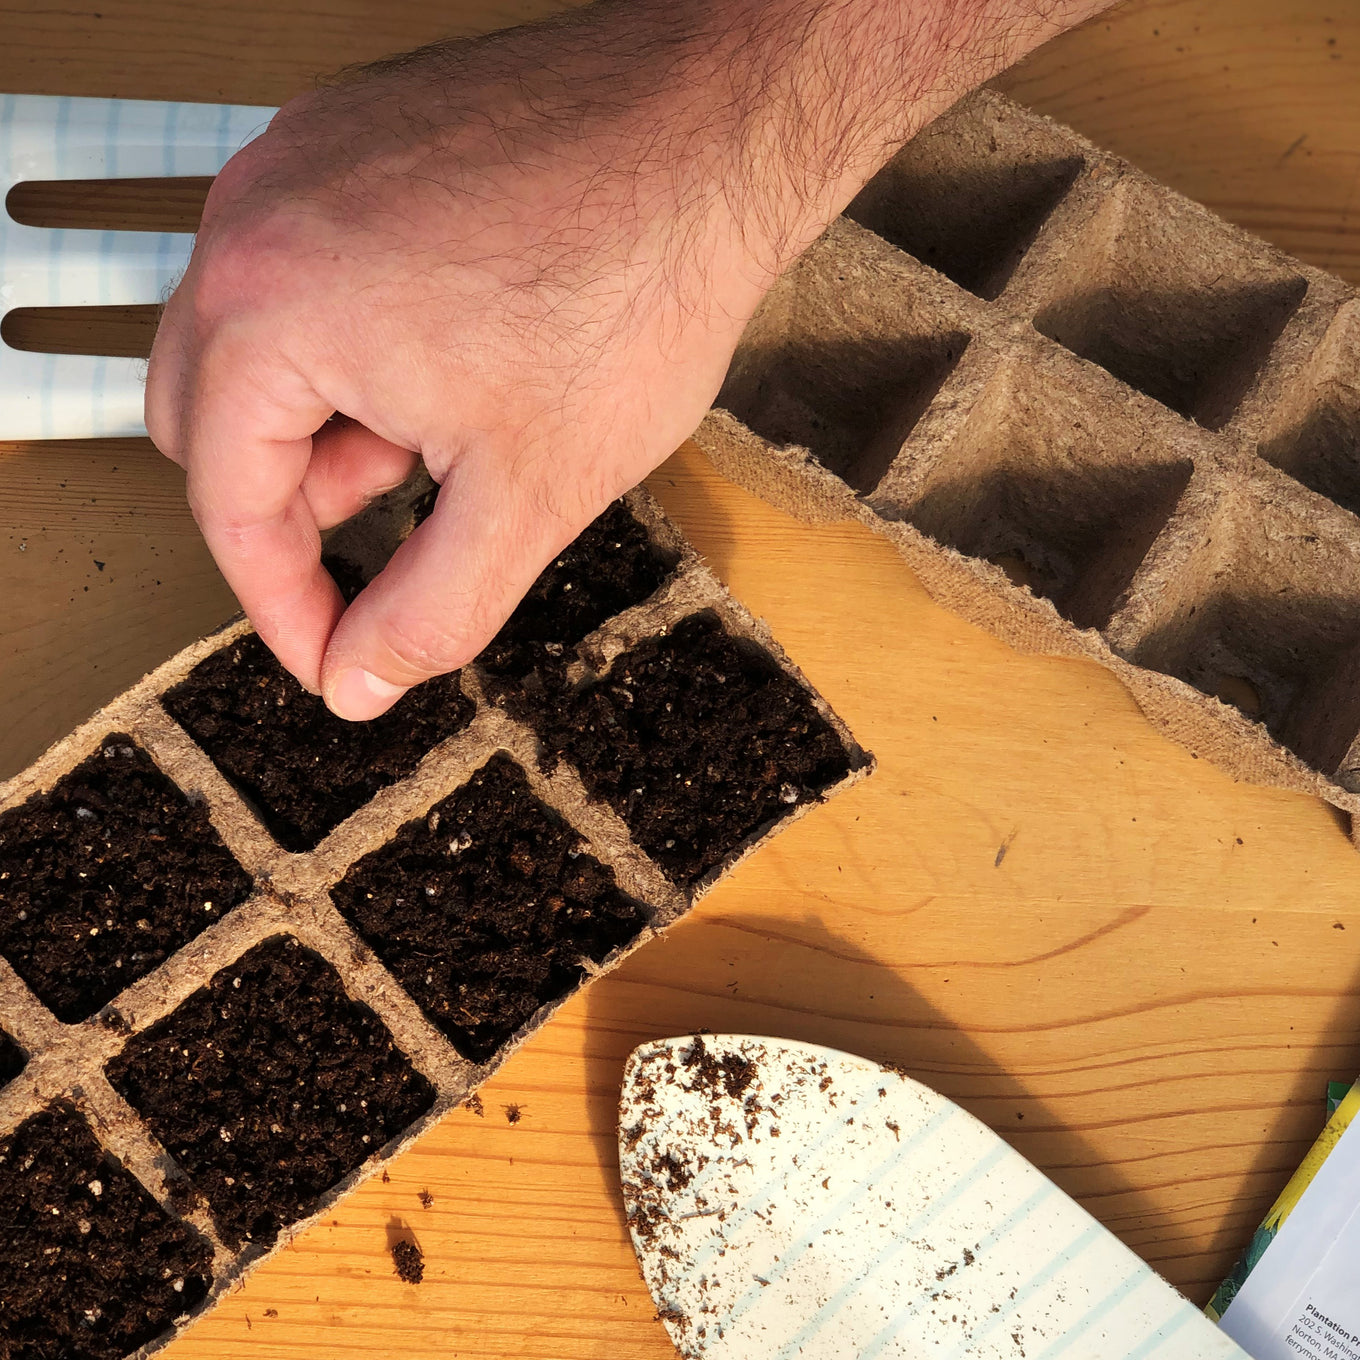 Start Dwarf Bolero Marigold seeds in biodegradable paper or peat strips.